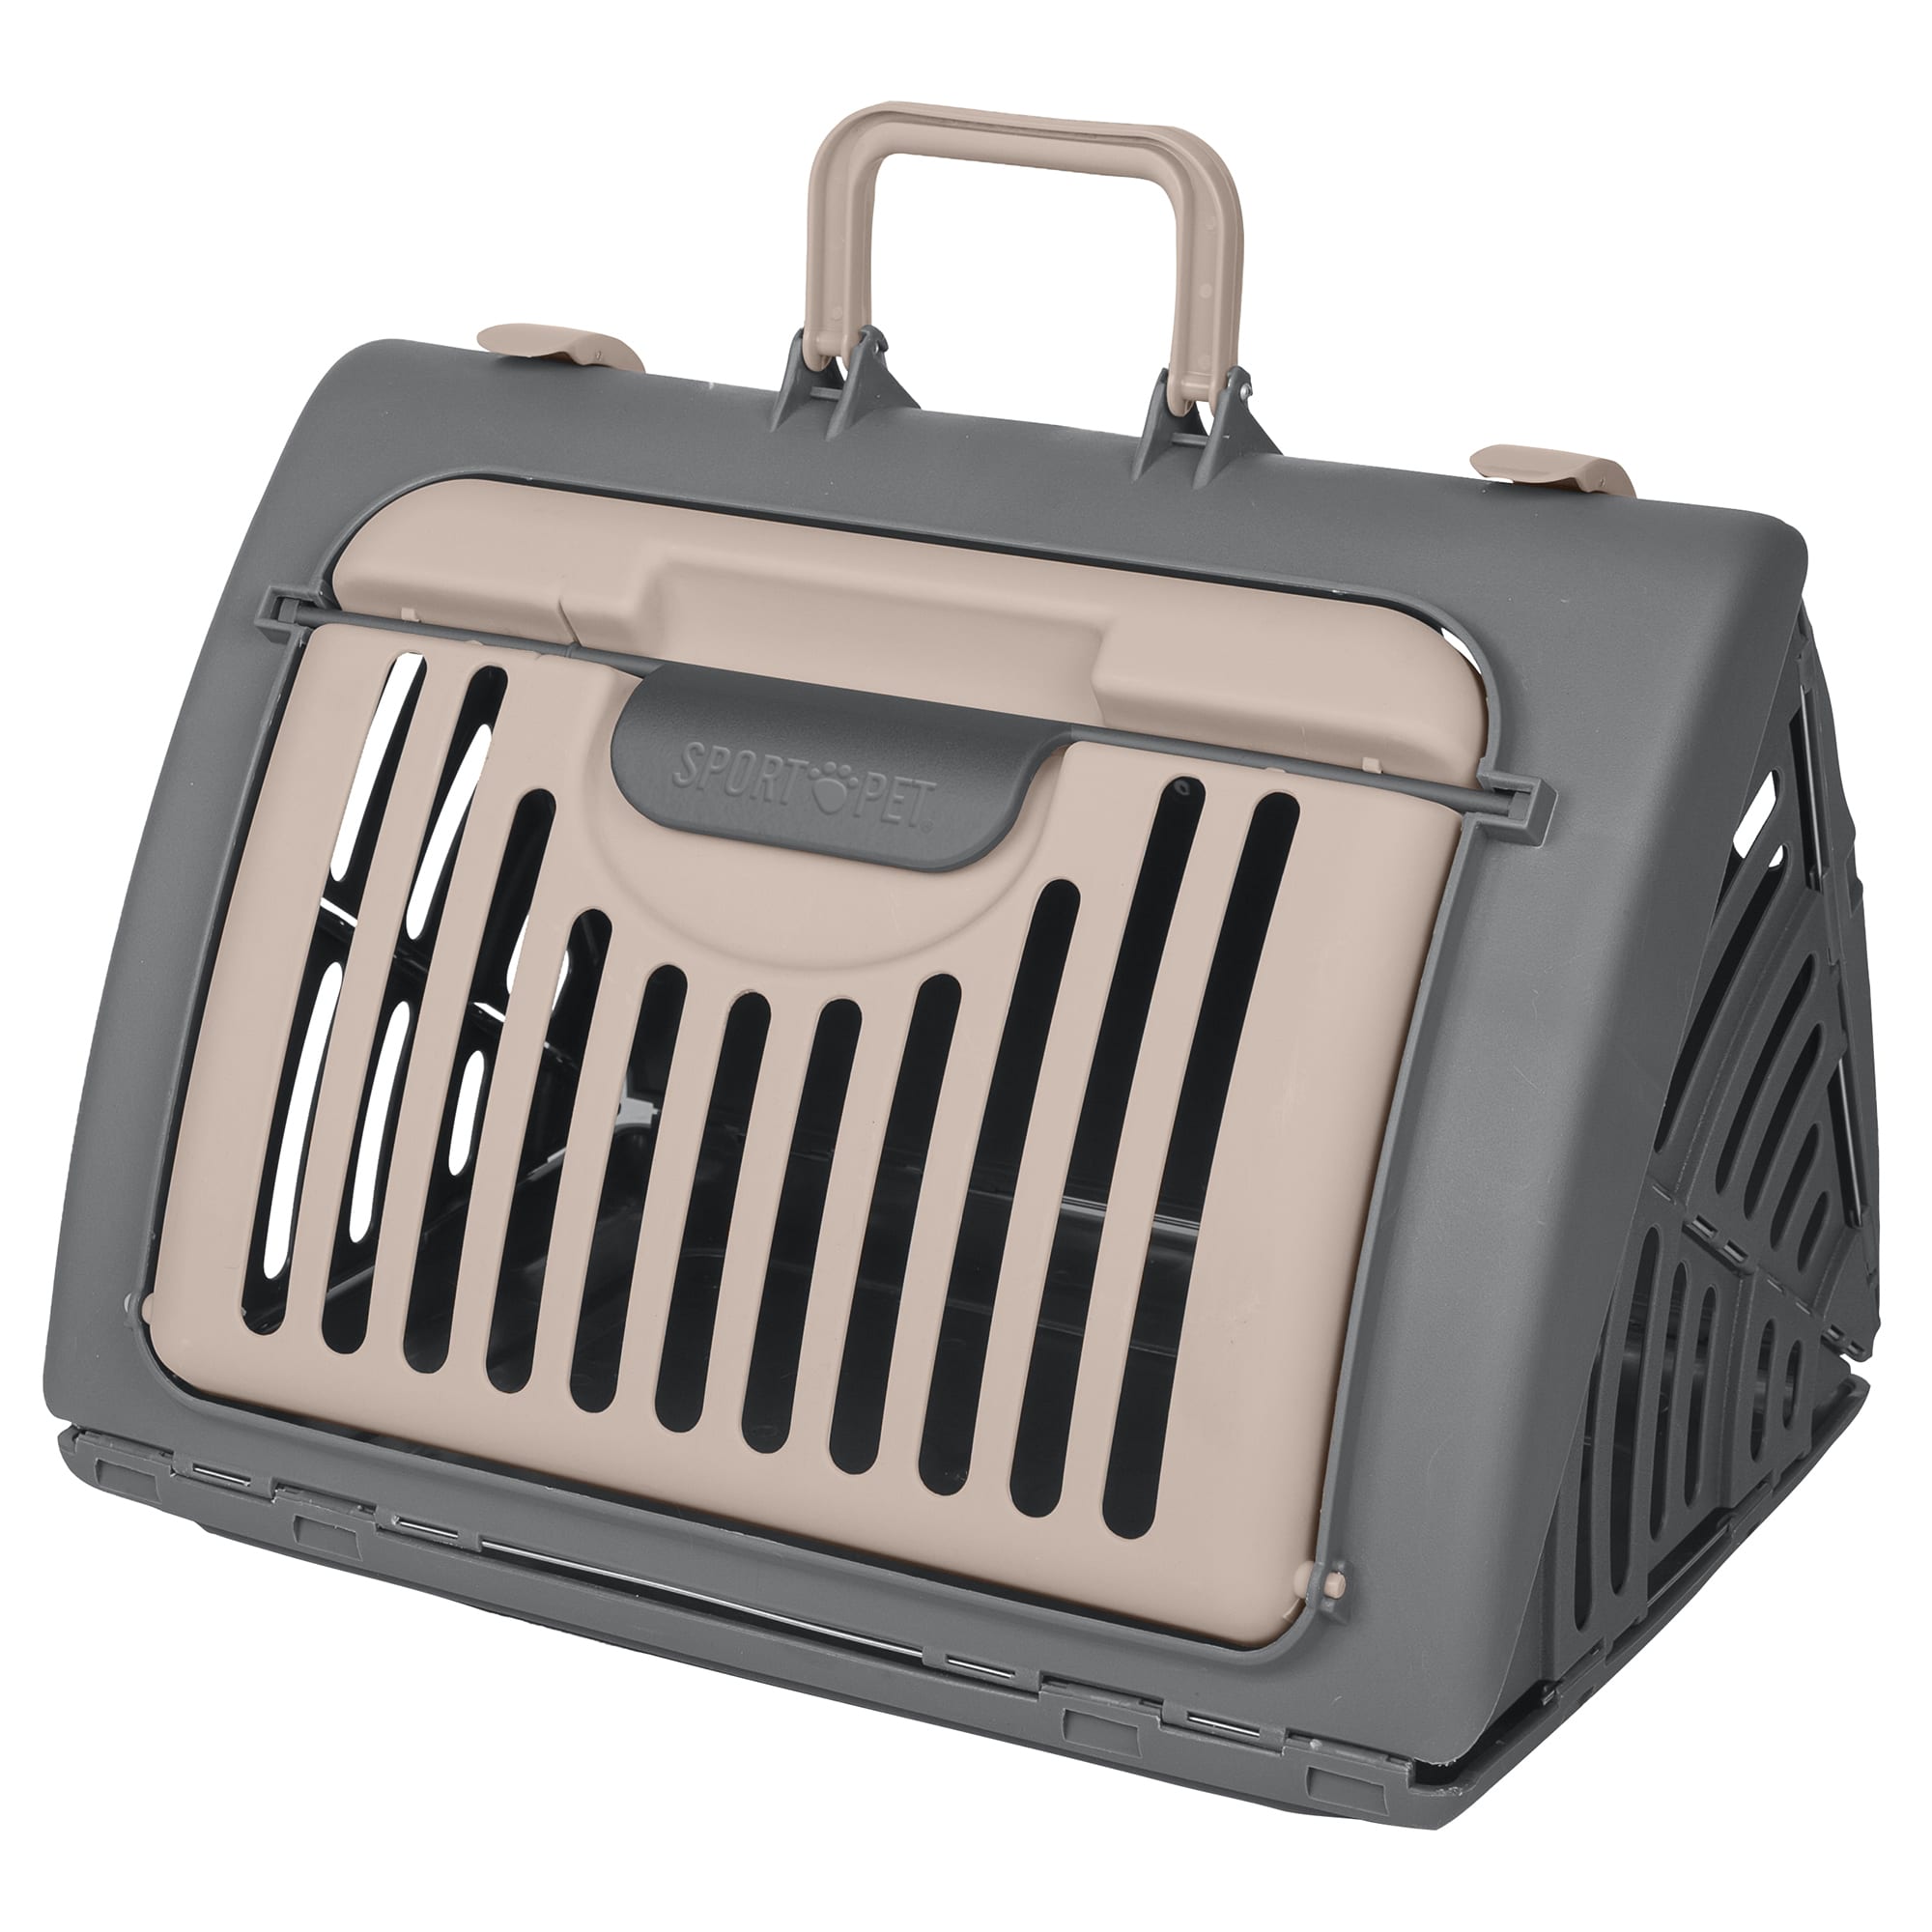 SportPet Foldable Plastic Travel Cat Carrier, For Cats 5-25 lb.